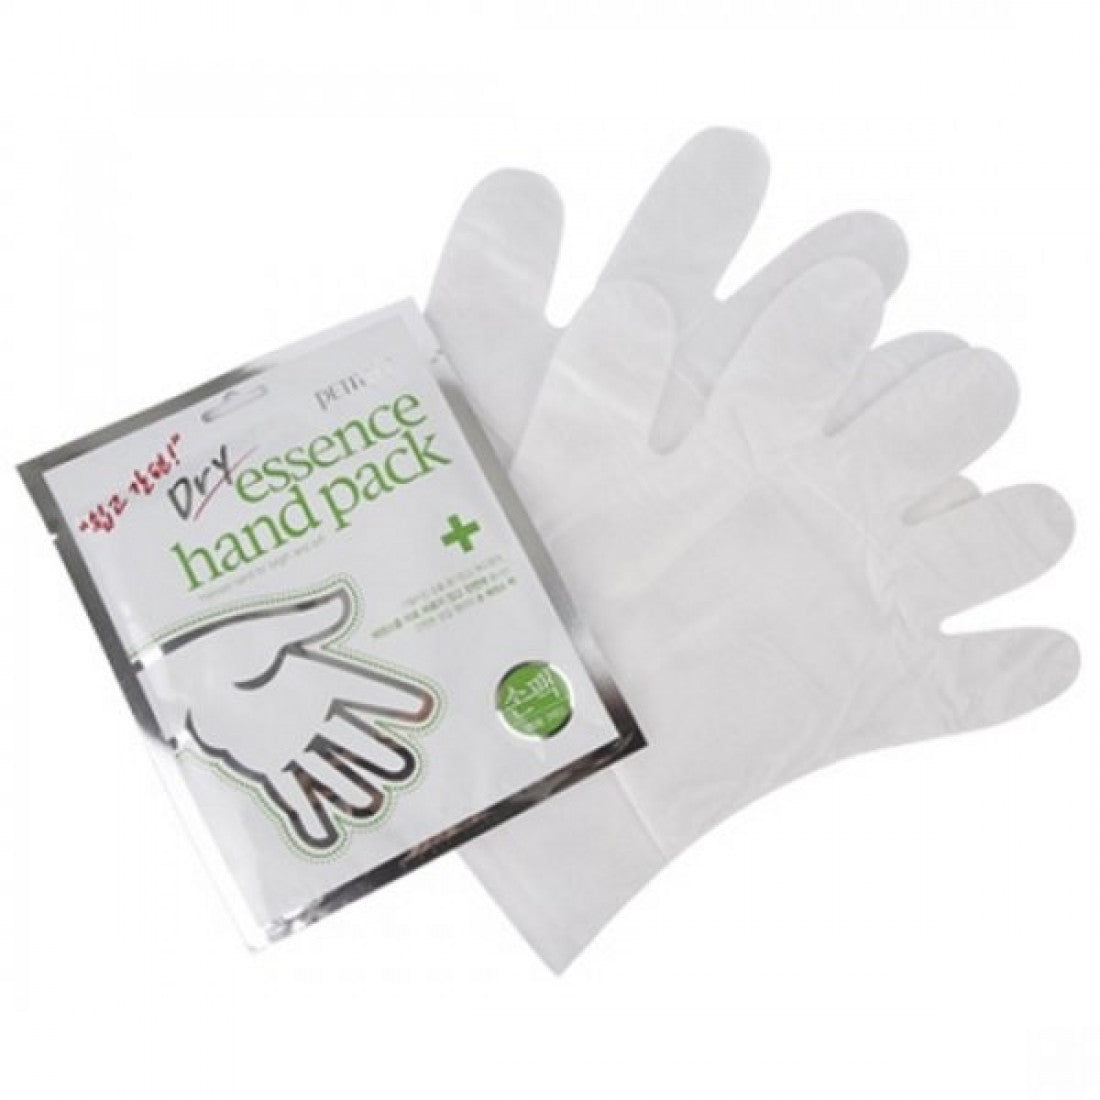 Maska rokām PETITFEE Dry Essence Hand Pack